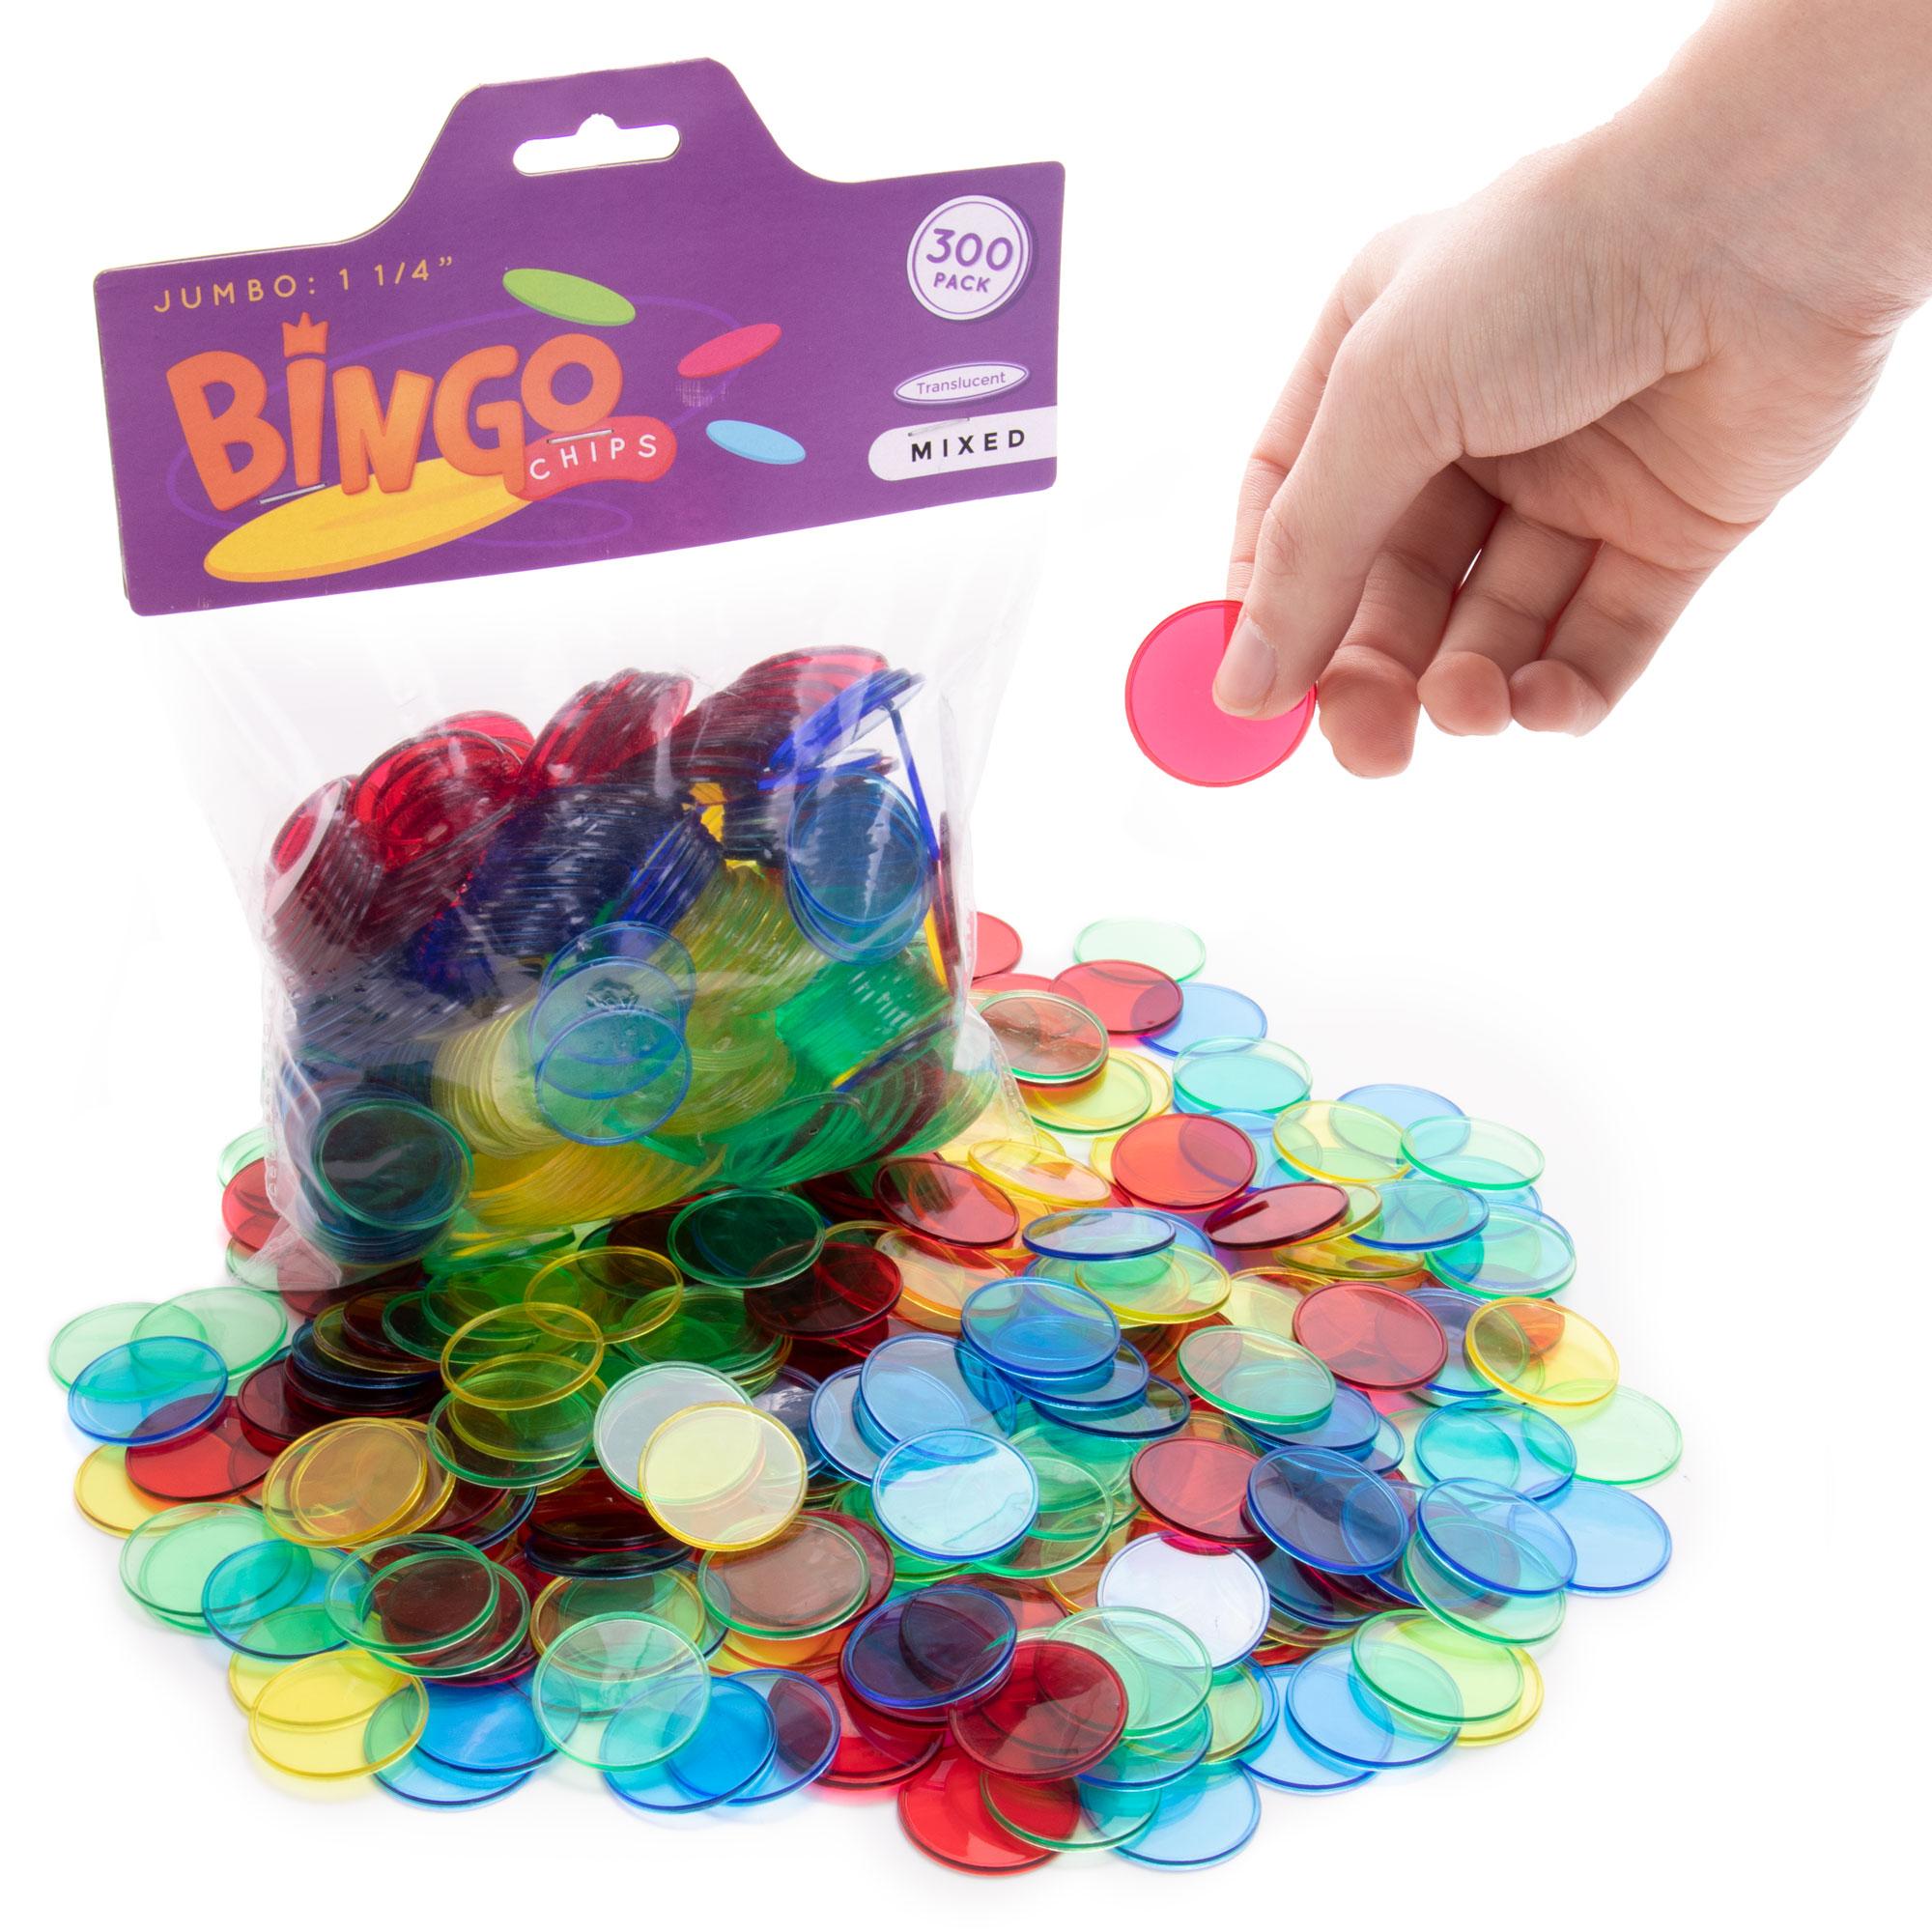 1.25" Translucent Jumbo Bingo Chips, Mixed Bag of 300 Chips